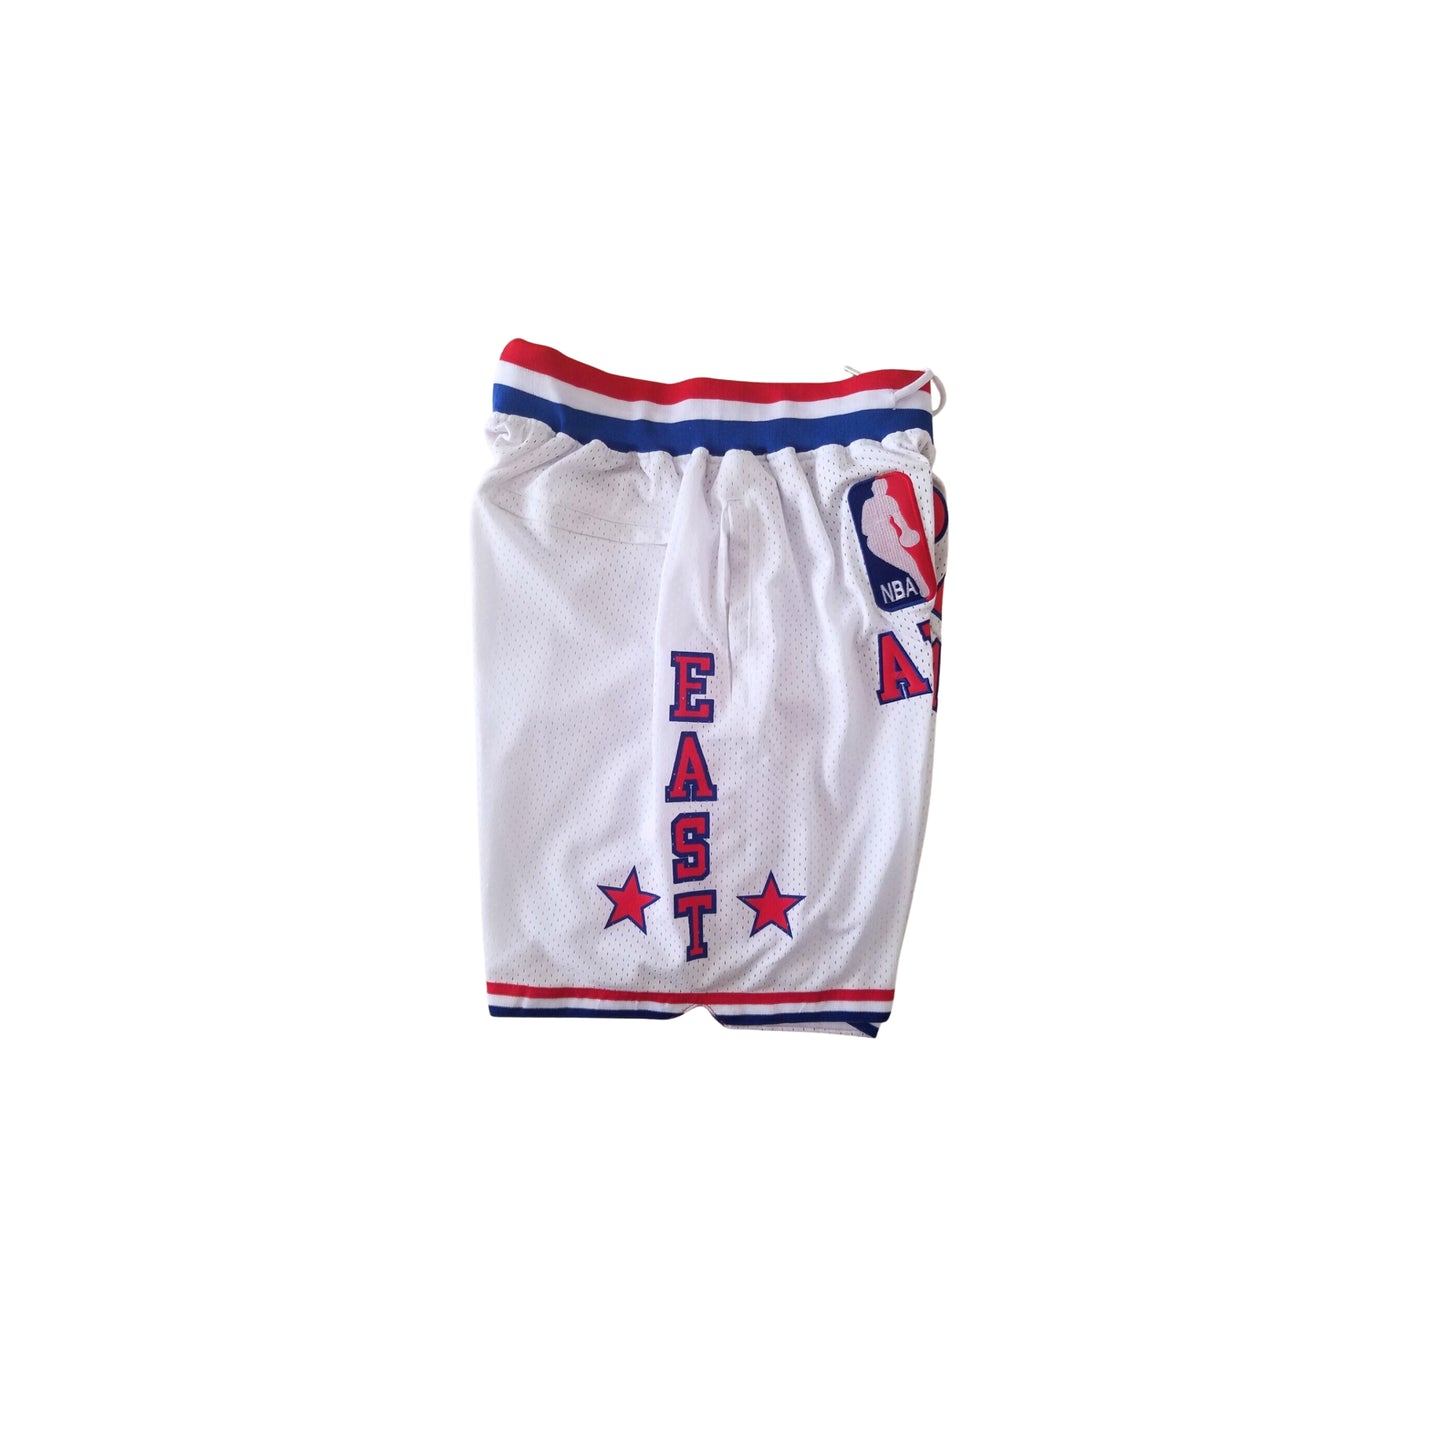 ALL-STAR Hoopen™ Basketball Shorts